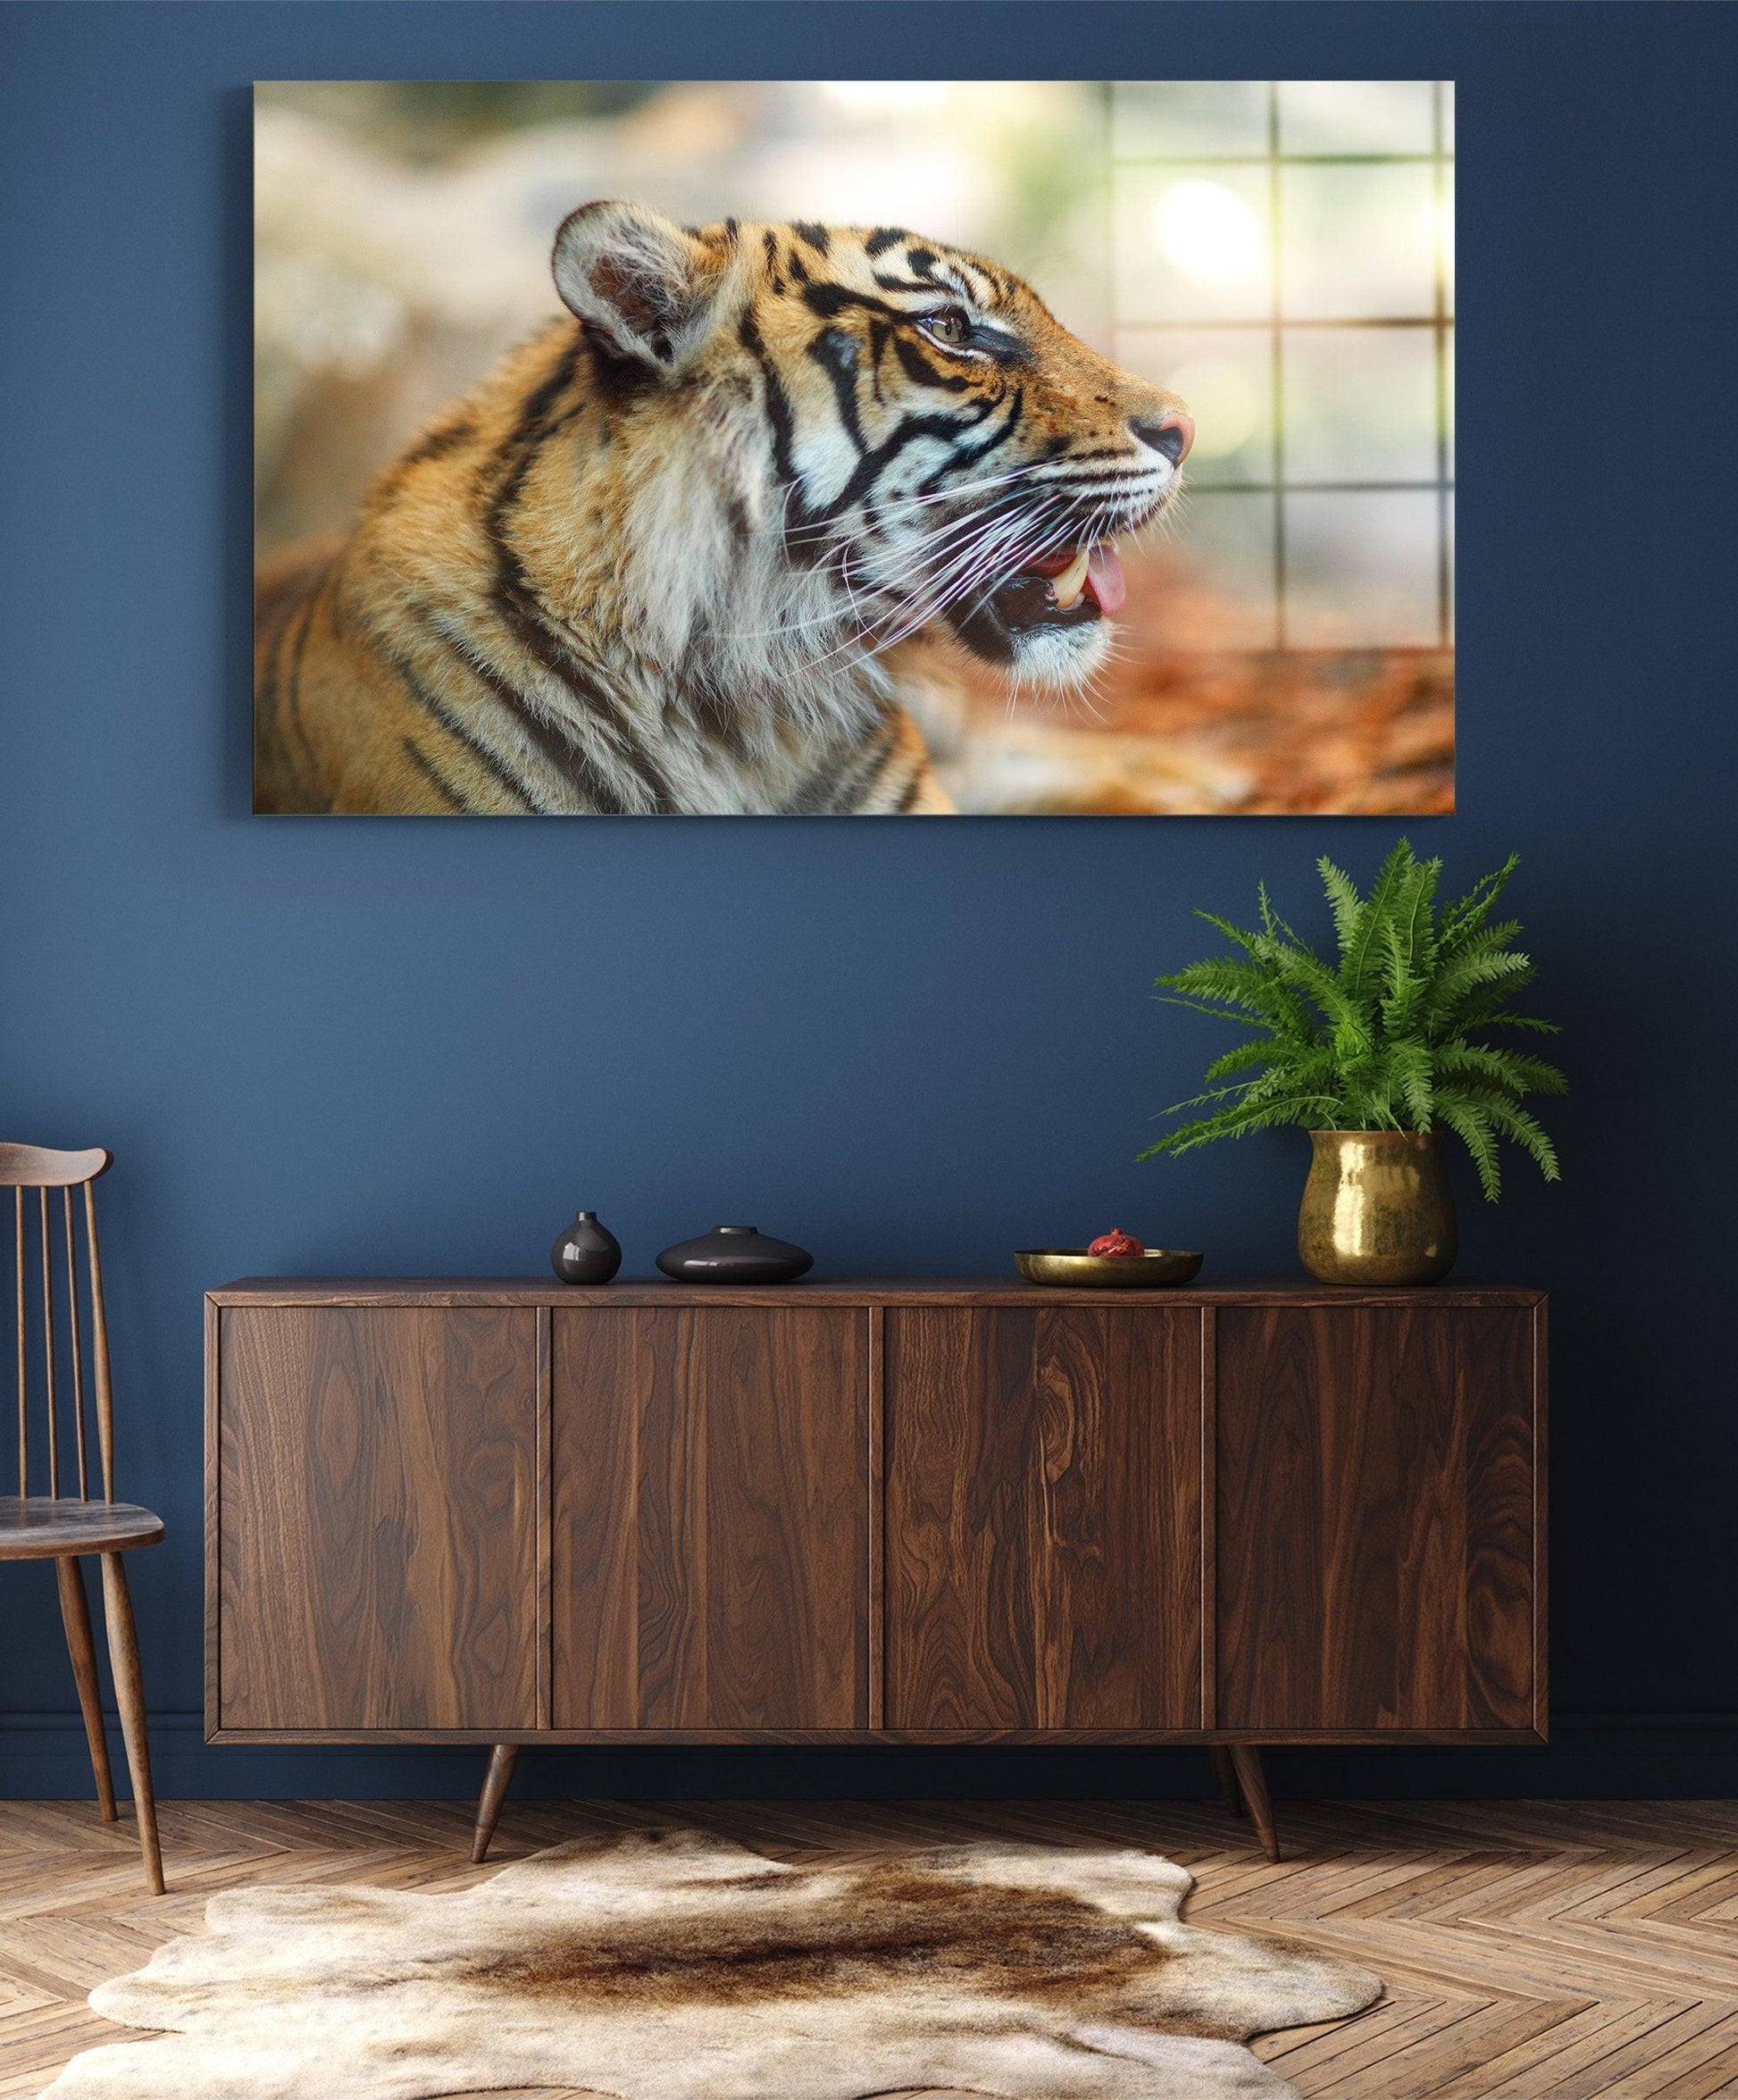 Leopard Glass Printing Wall Art | Modern Decor Ideas For House, leopard wall art, leopard glass wall art, animal poster, wild animal poster - TrendiArt